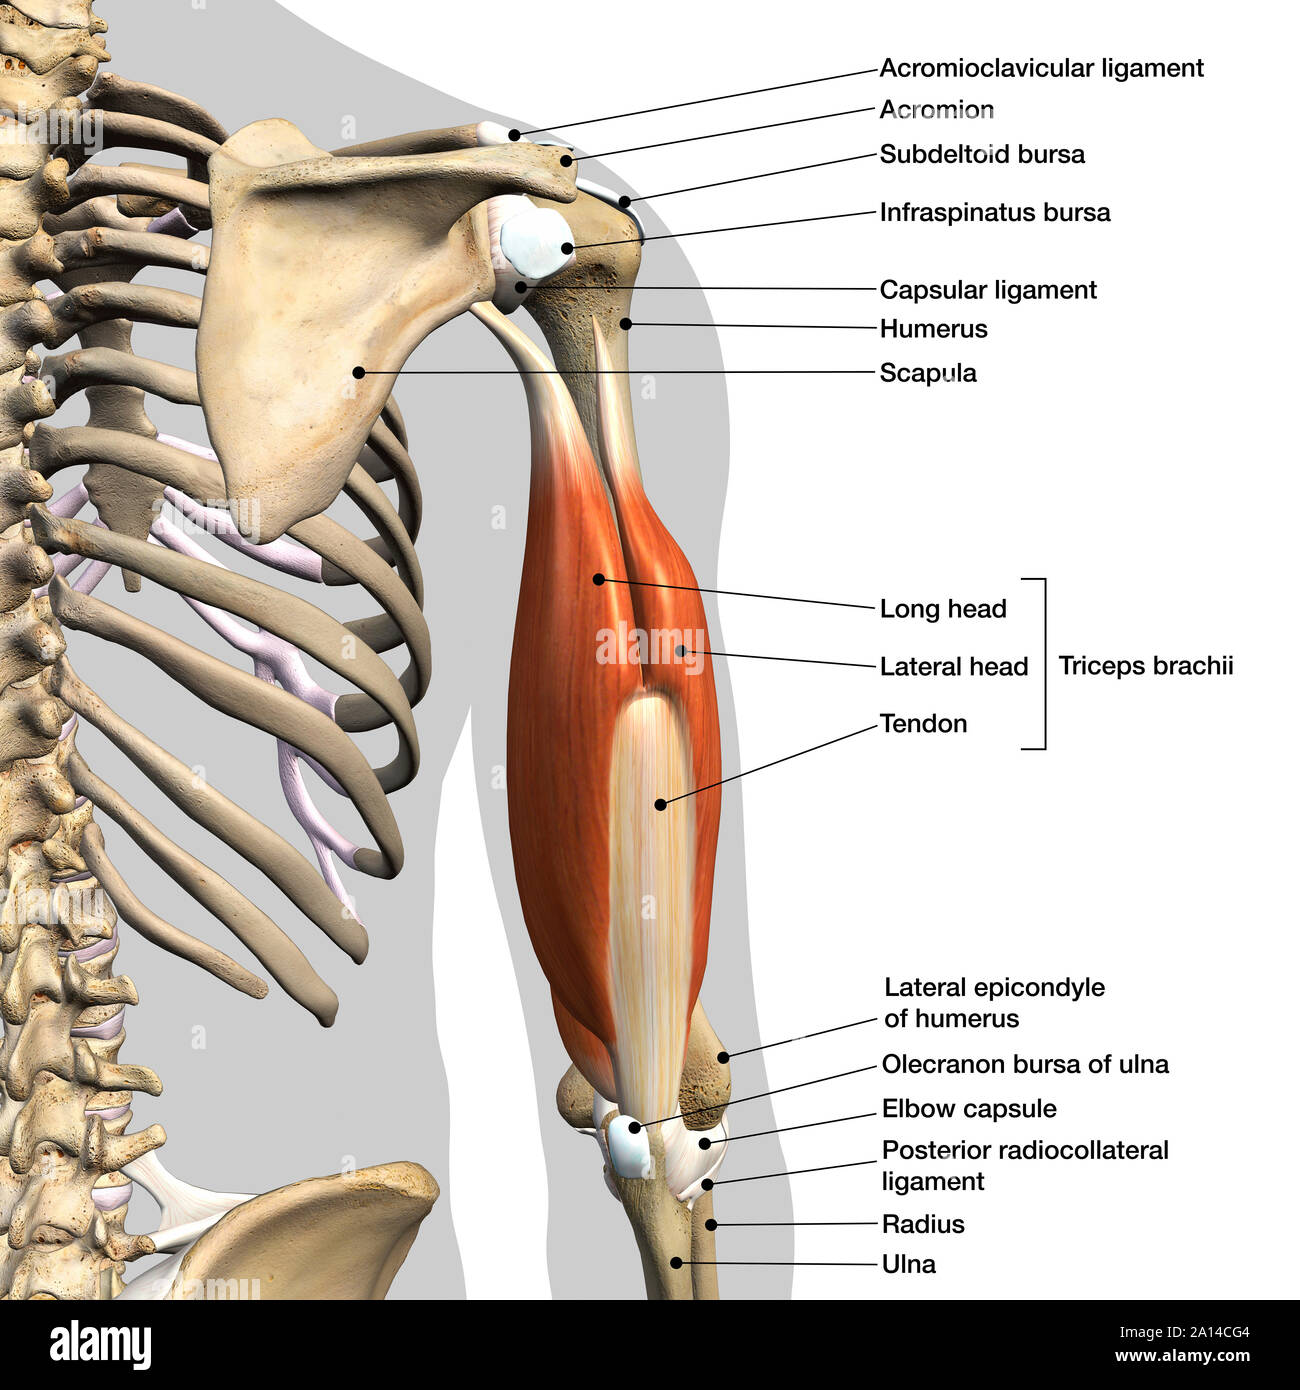 Human Anatomy Chart Bones